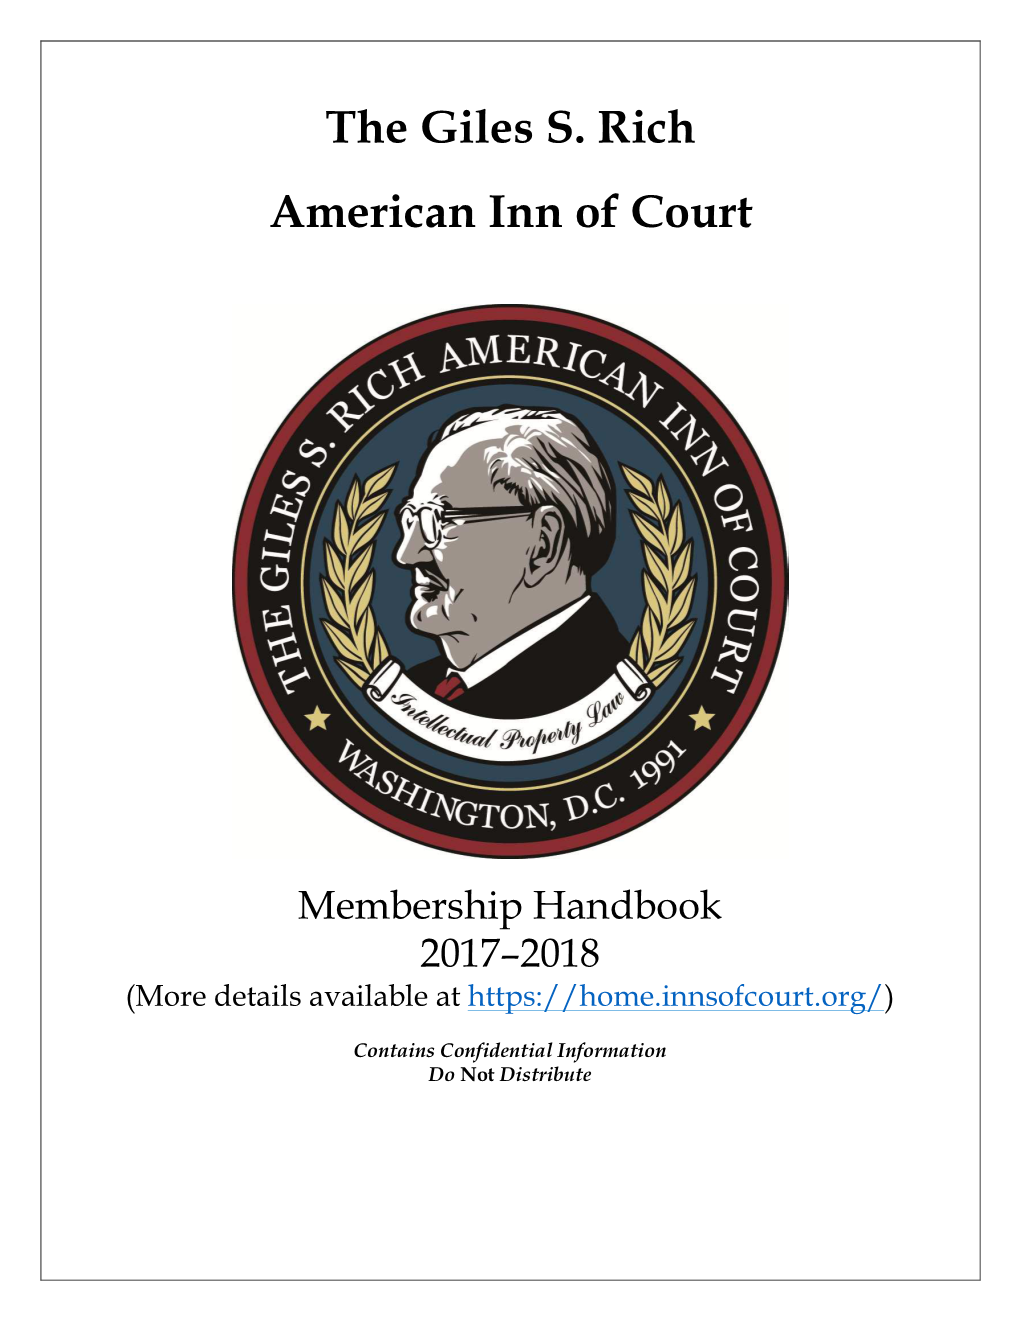 The Giles S. Rich American Inn of Court Award